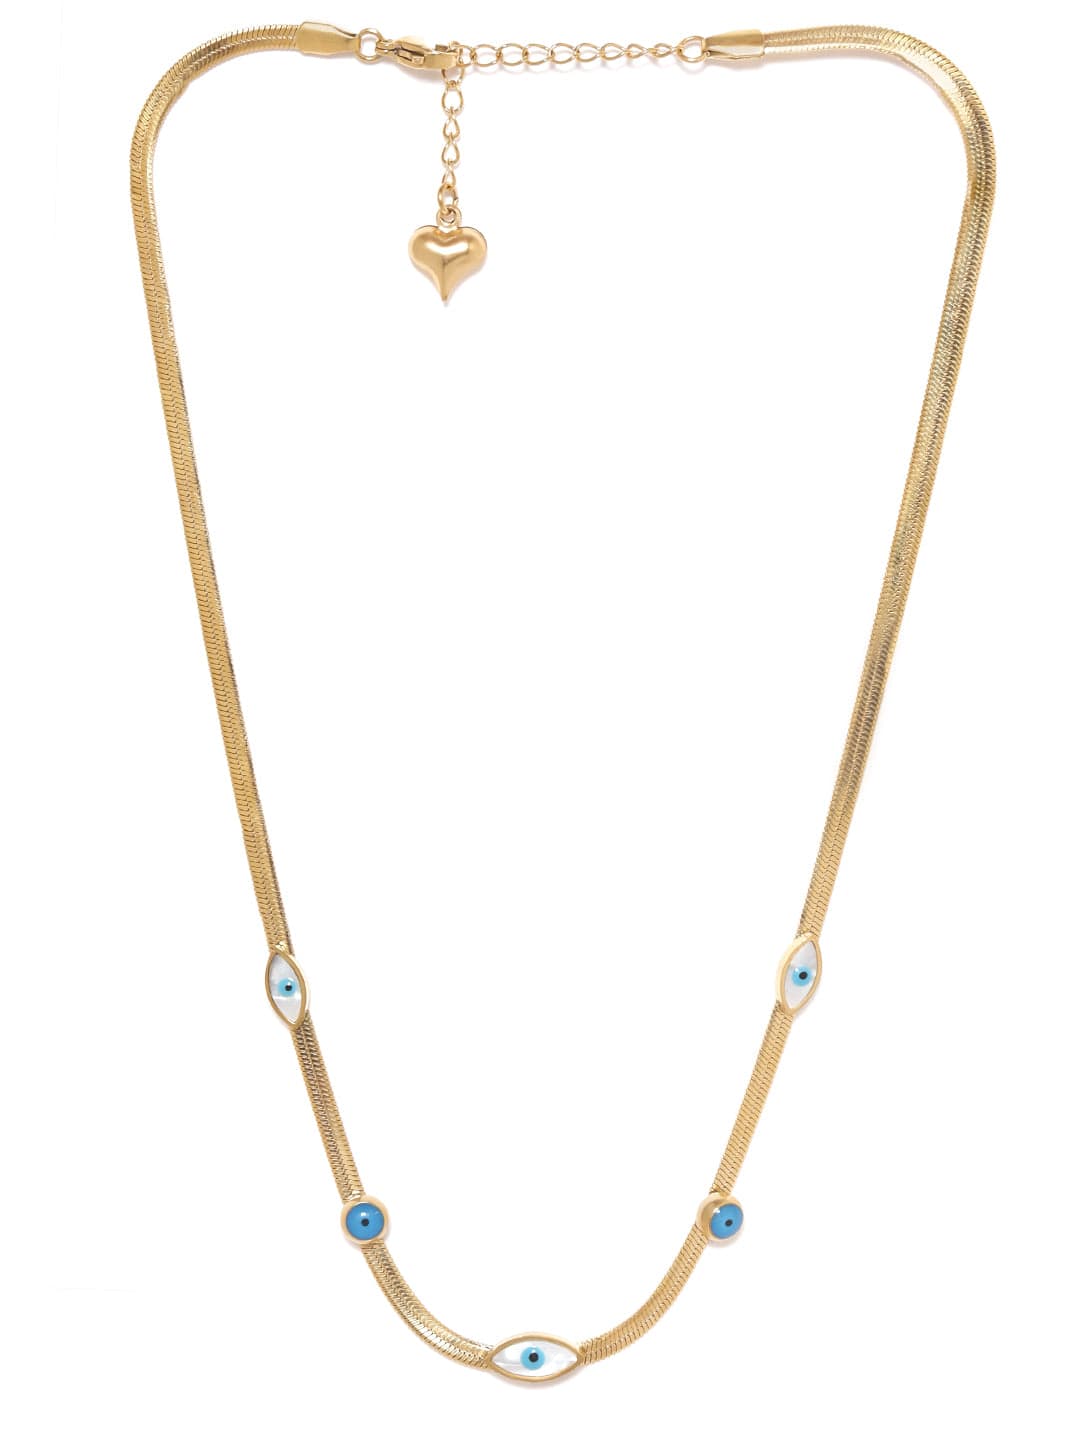 Rubans Voguish Gilded Adornments Gold Tone Necklace Necklace